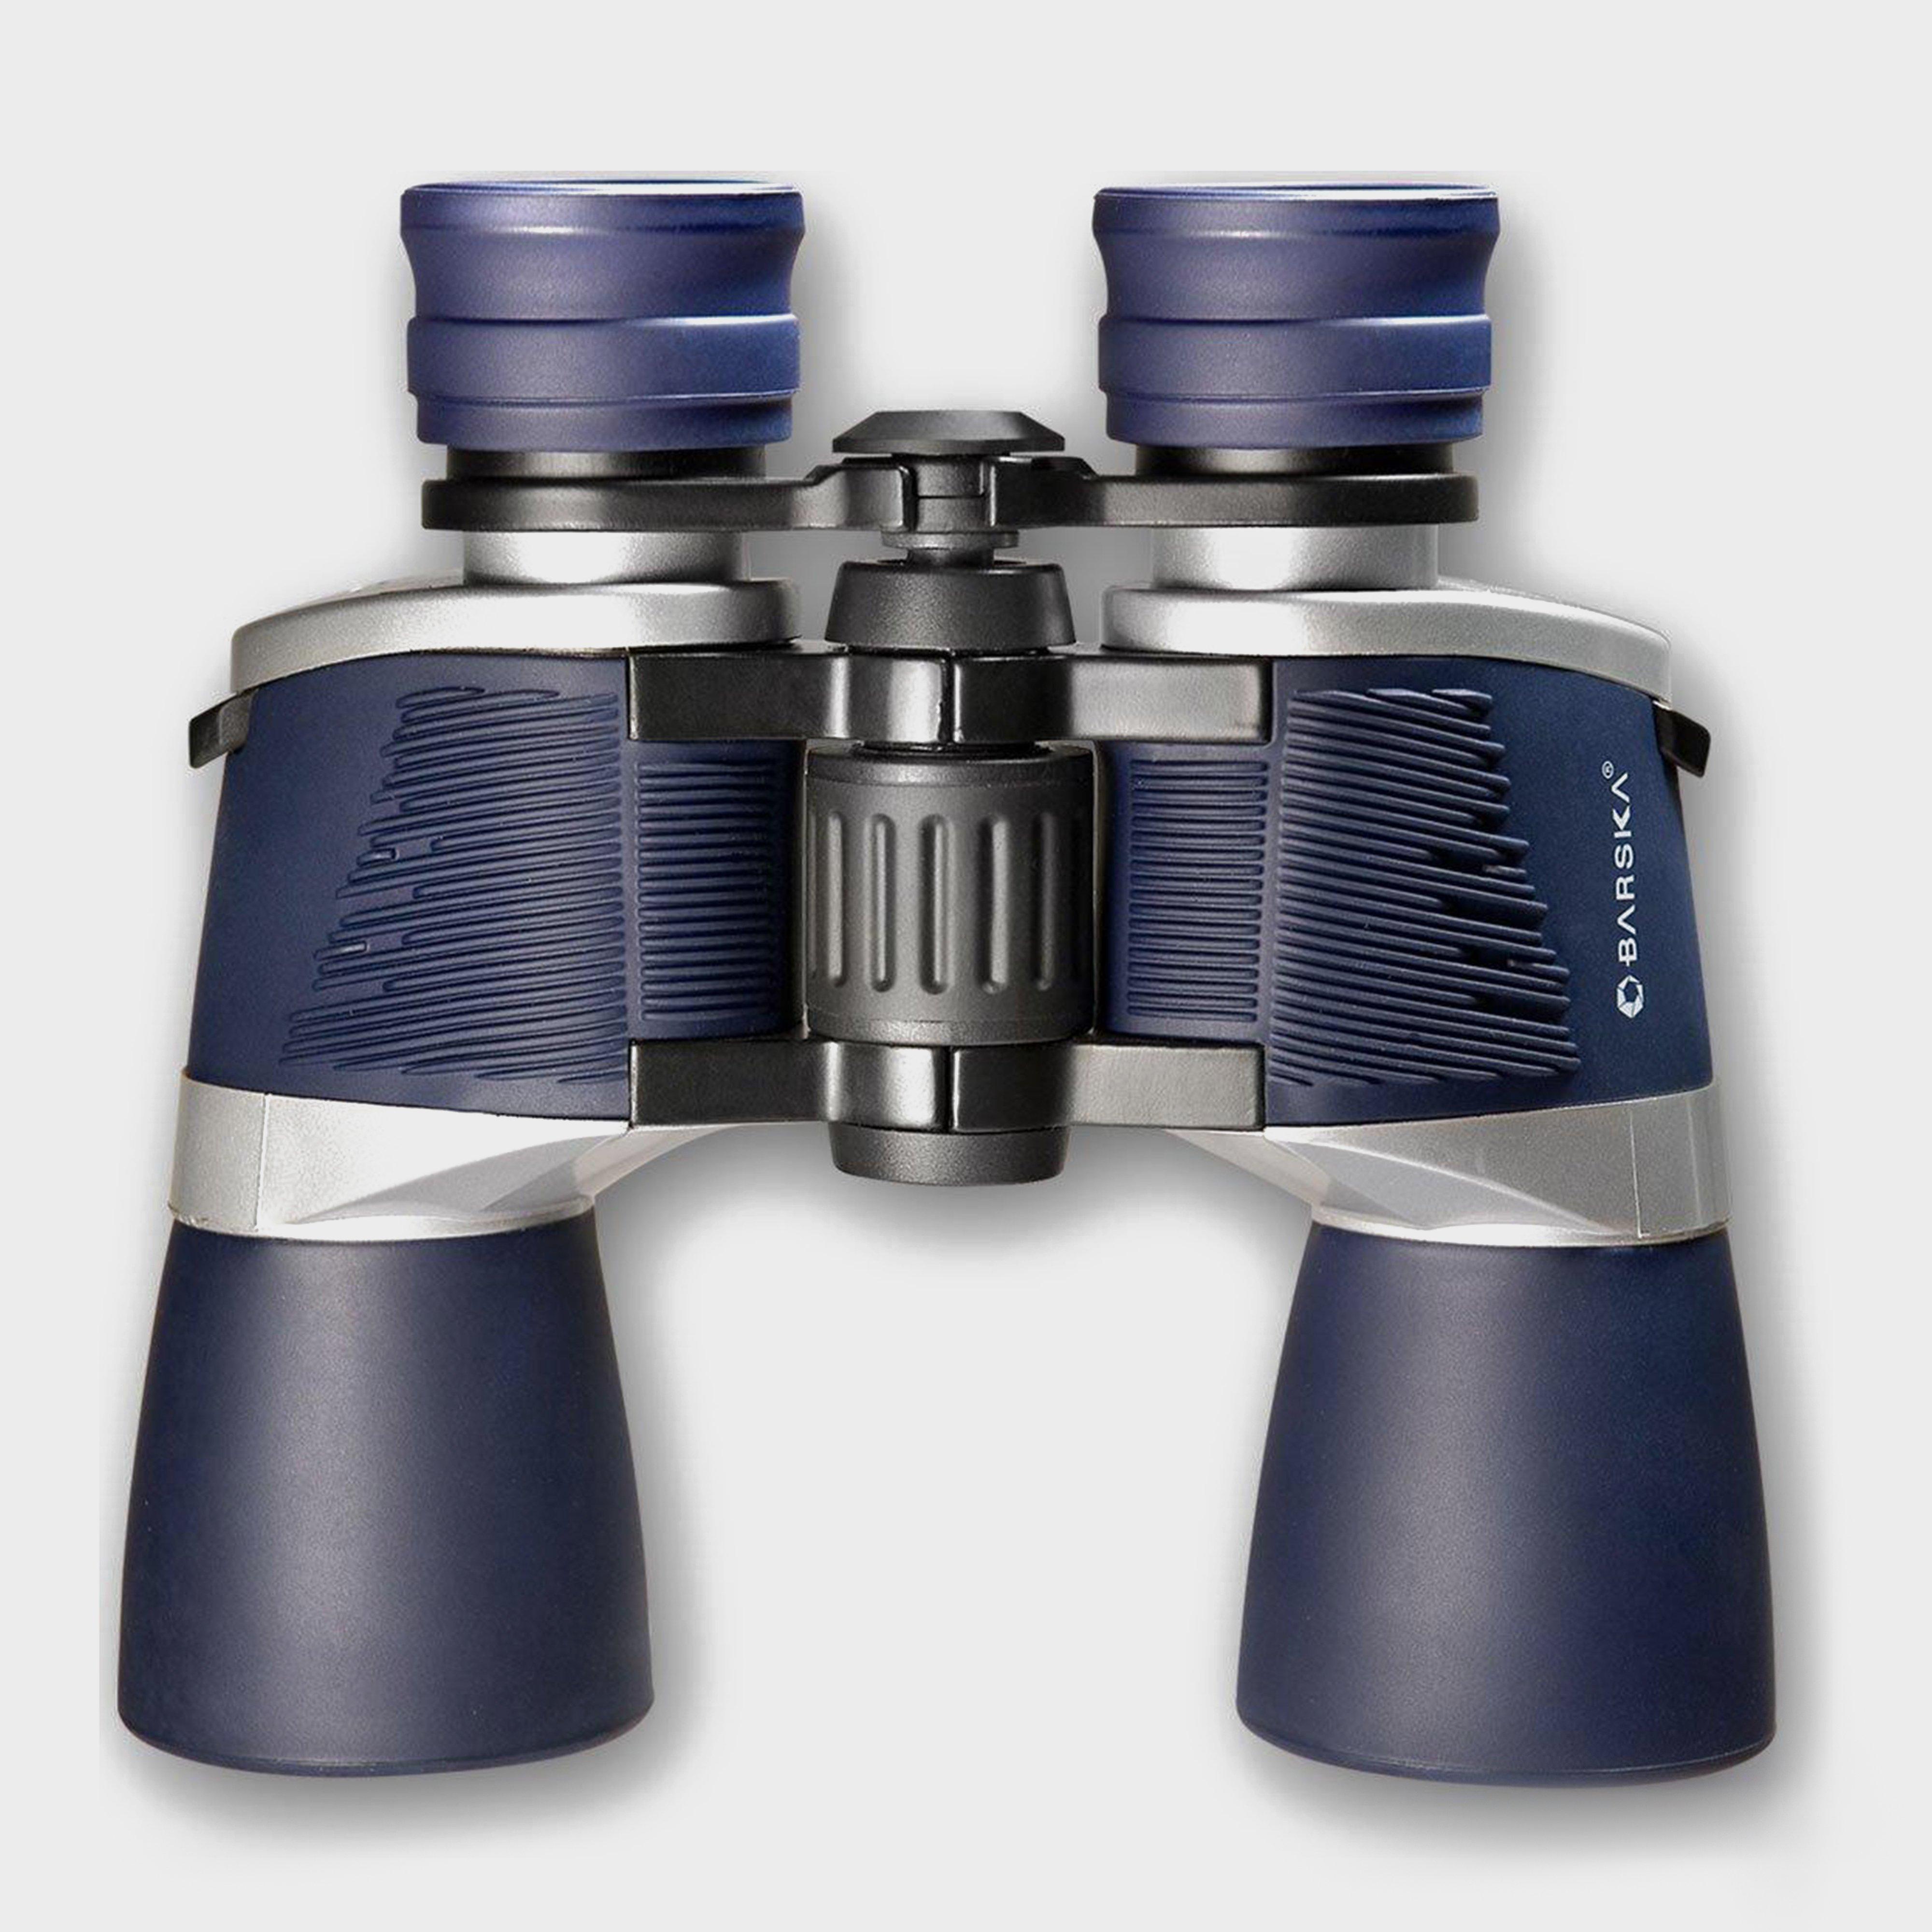 Barska X-Treme View Binoculars Review